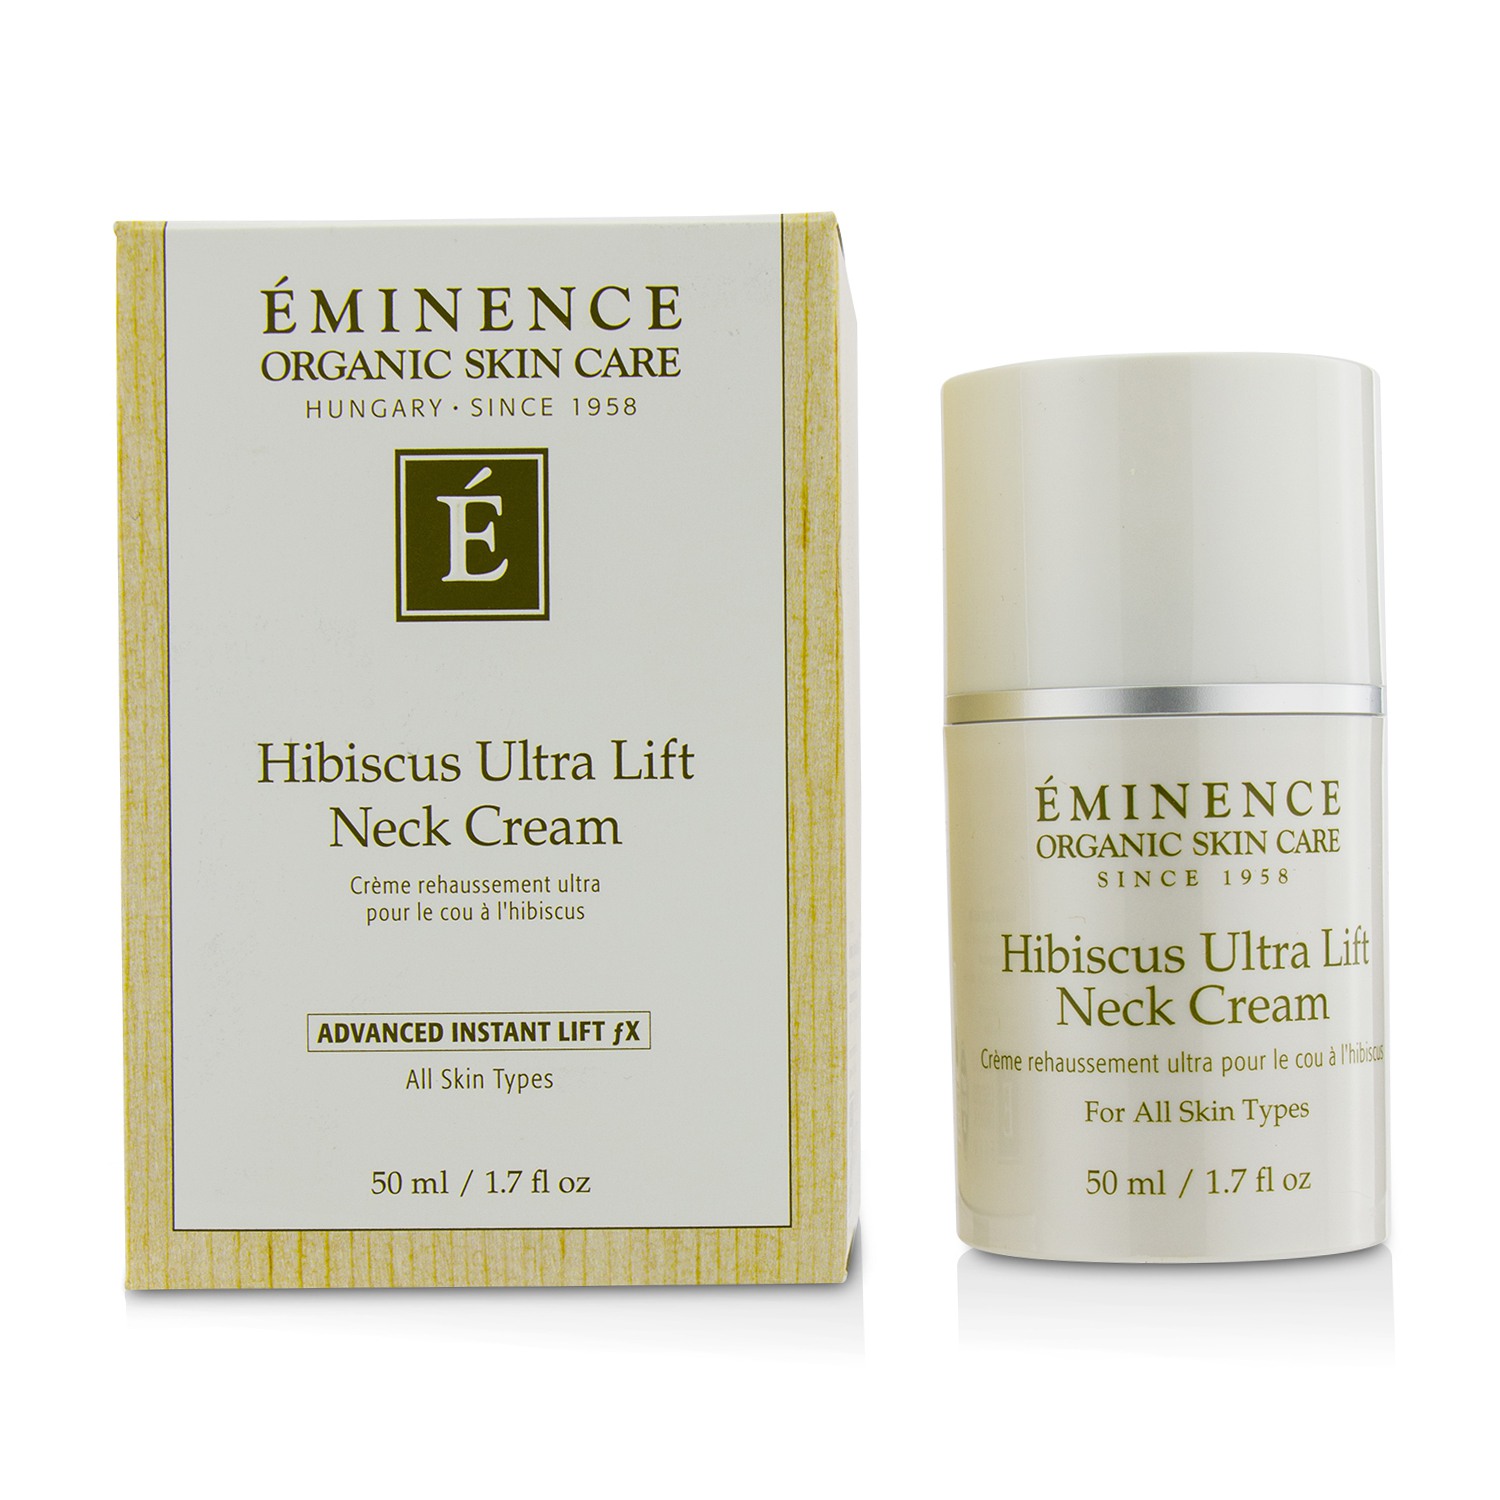 Hibiscus Ultra Lift Neck Cream Eminence Image